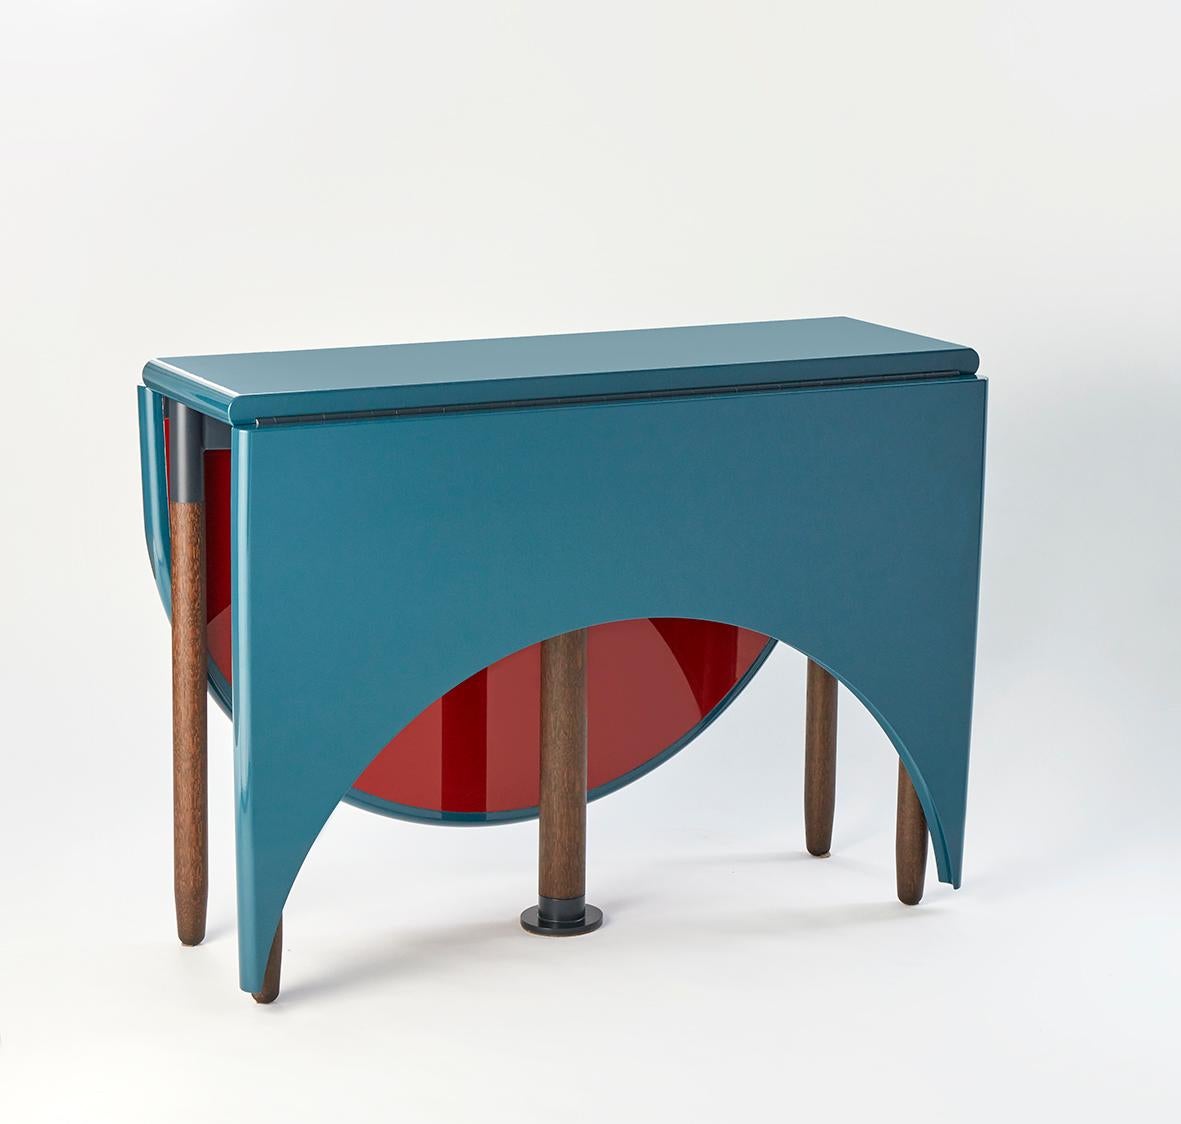 Contemporary Set of 2 Belenus and La Luna Tables by Gisbert Pöppler For Sale